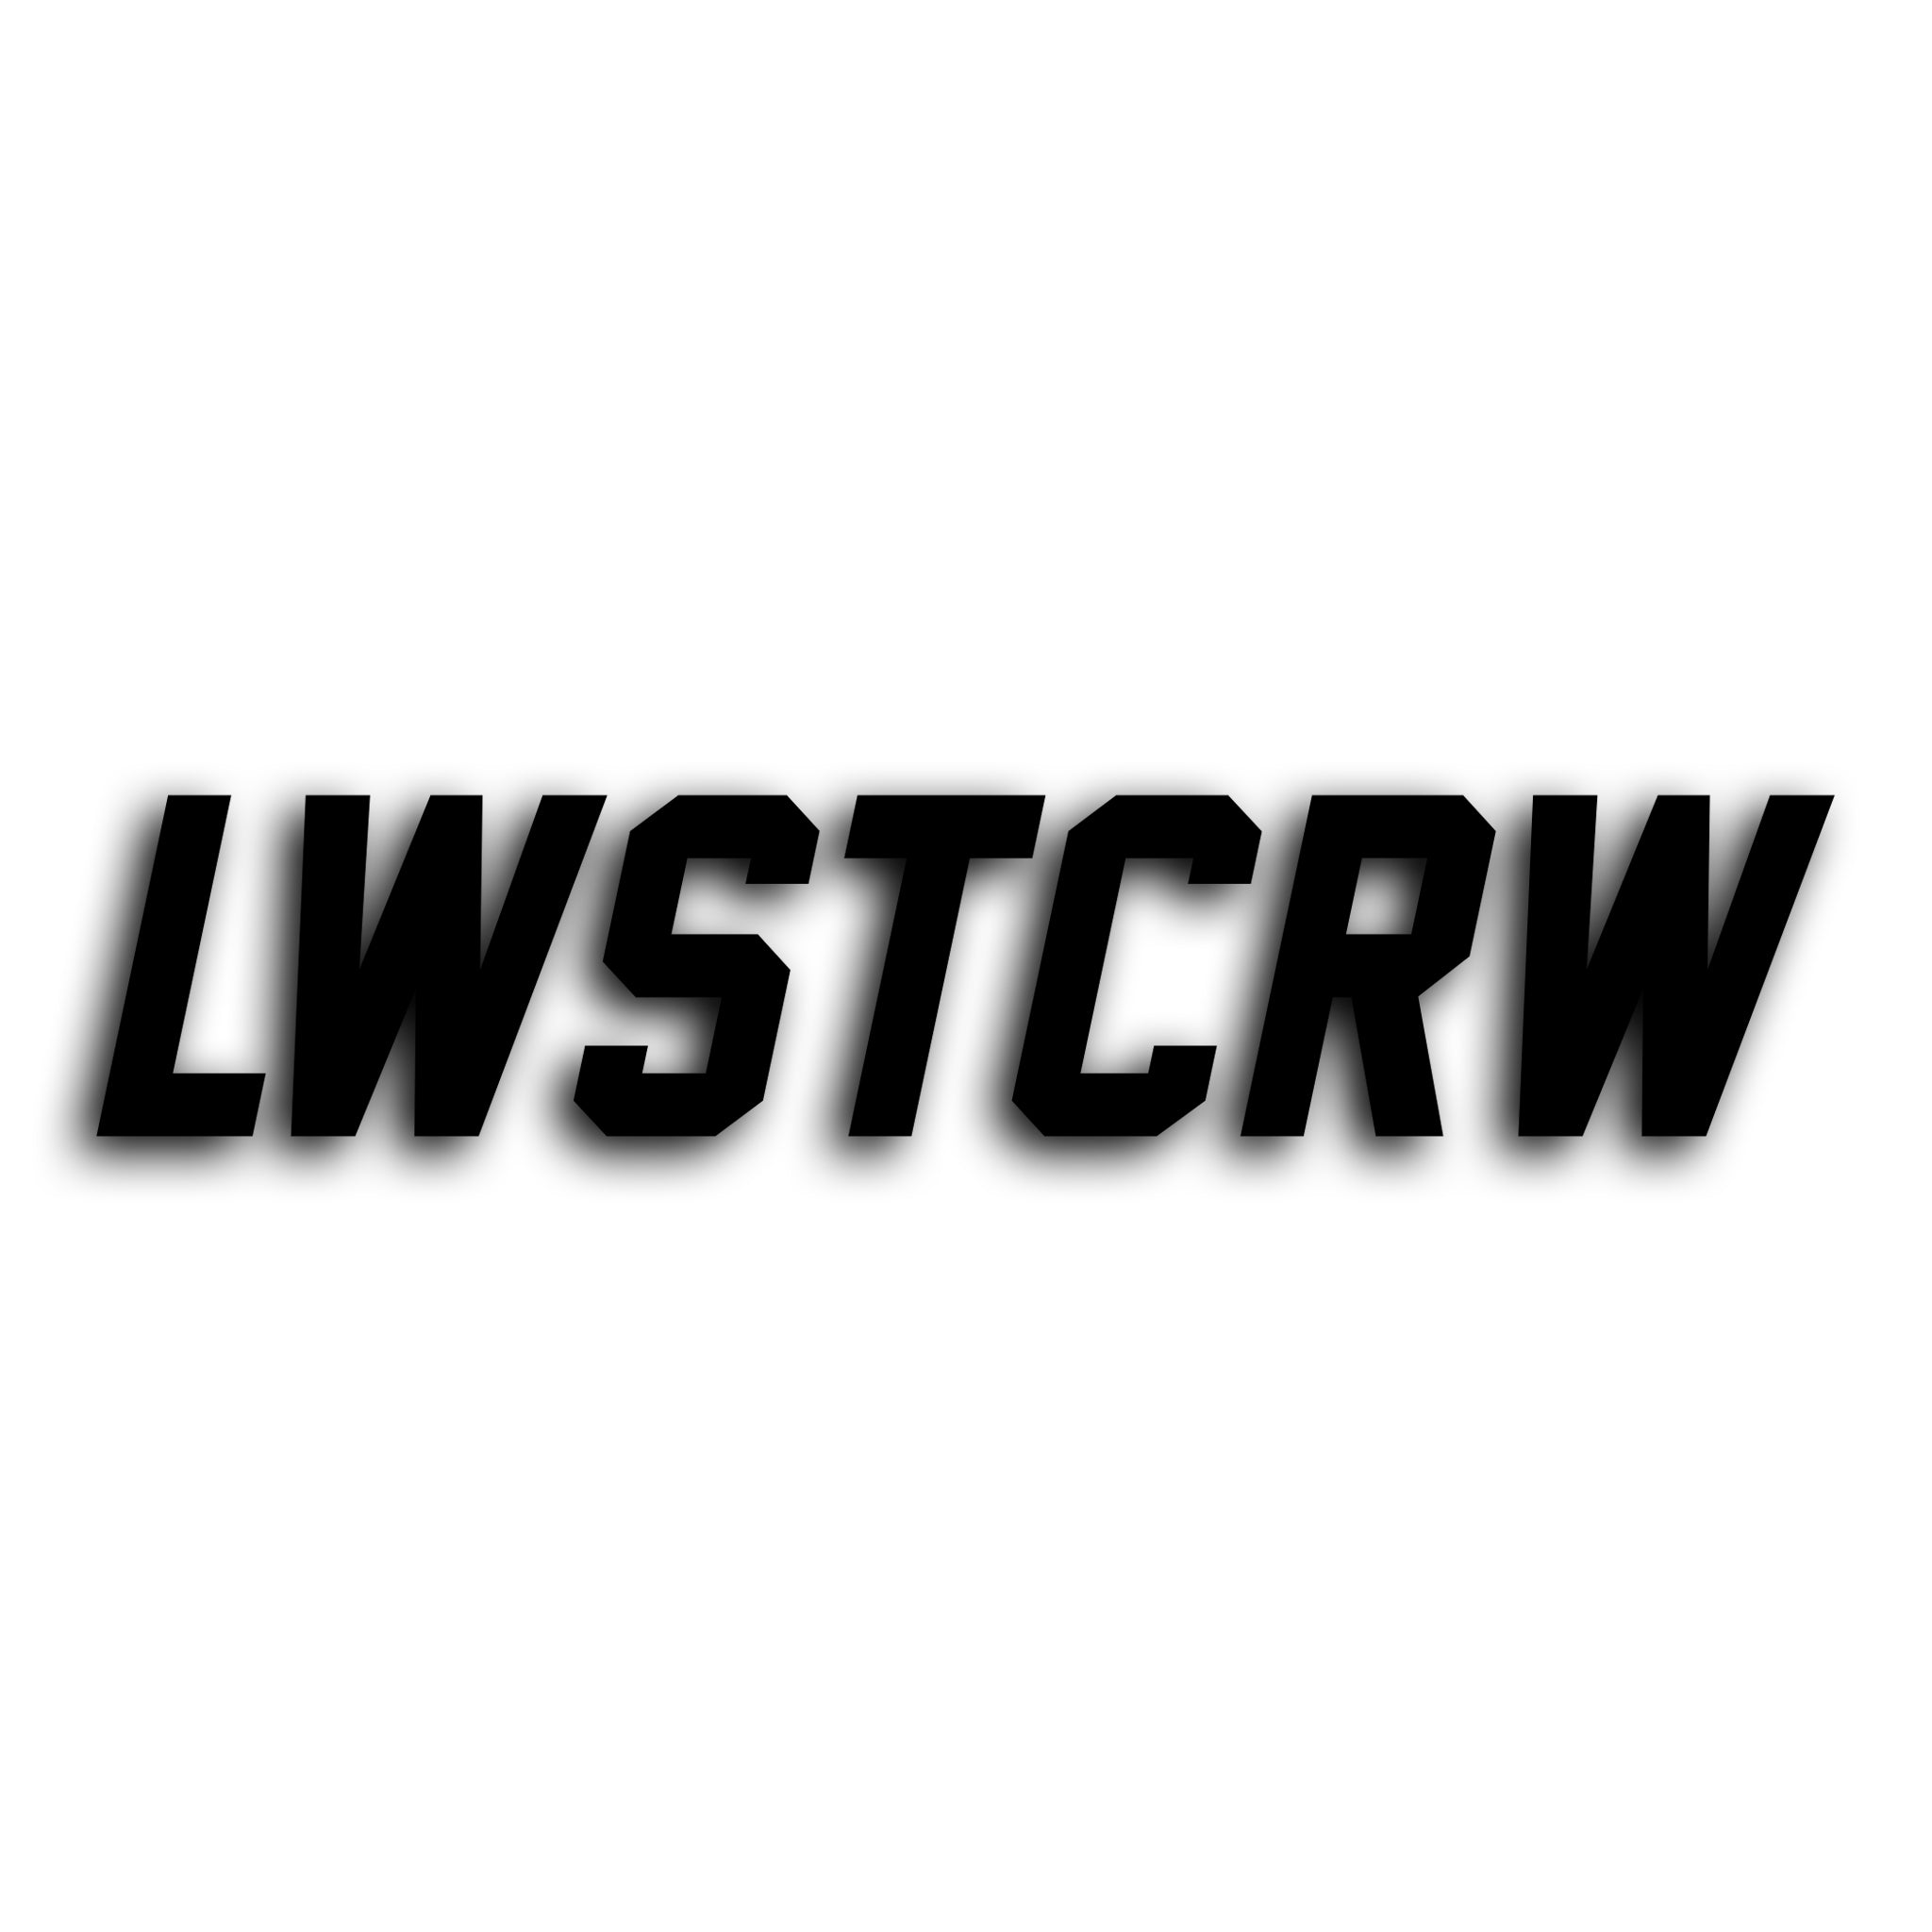 LWSTCRW™ Sticker "JERSEY"